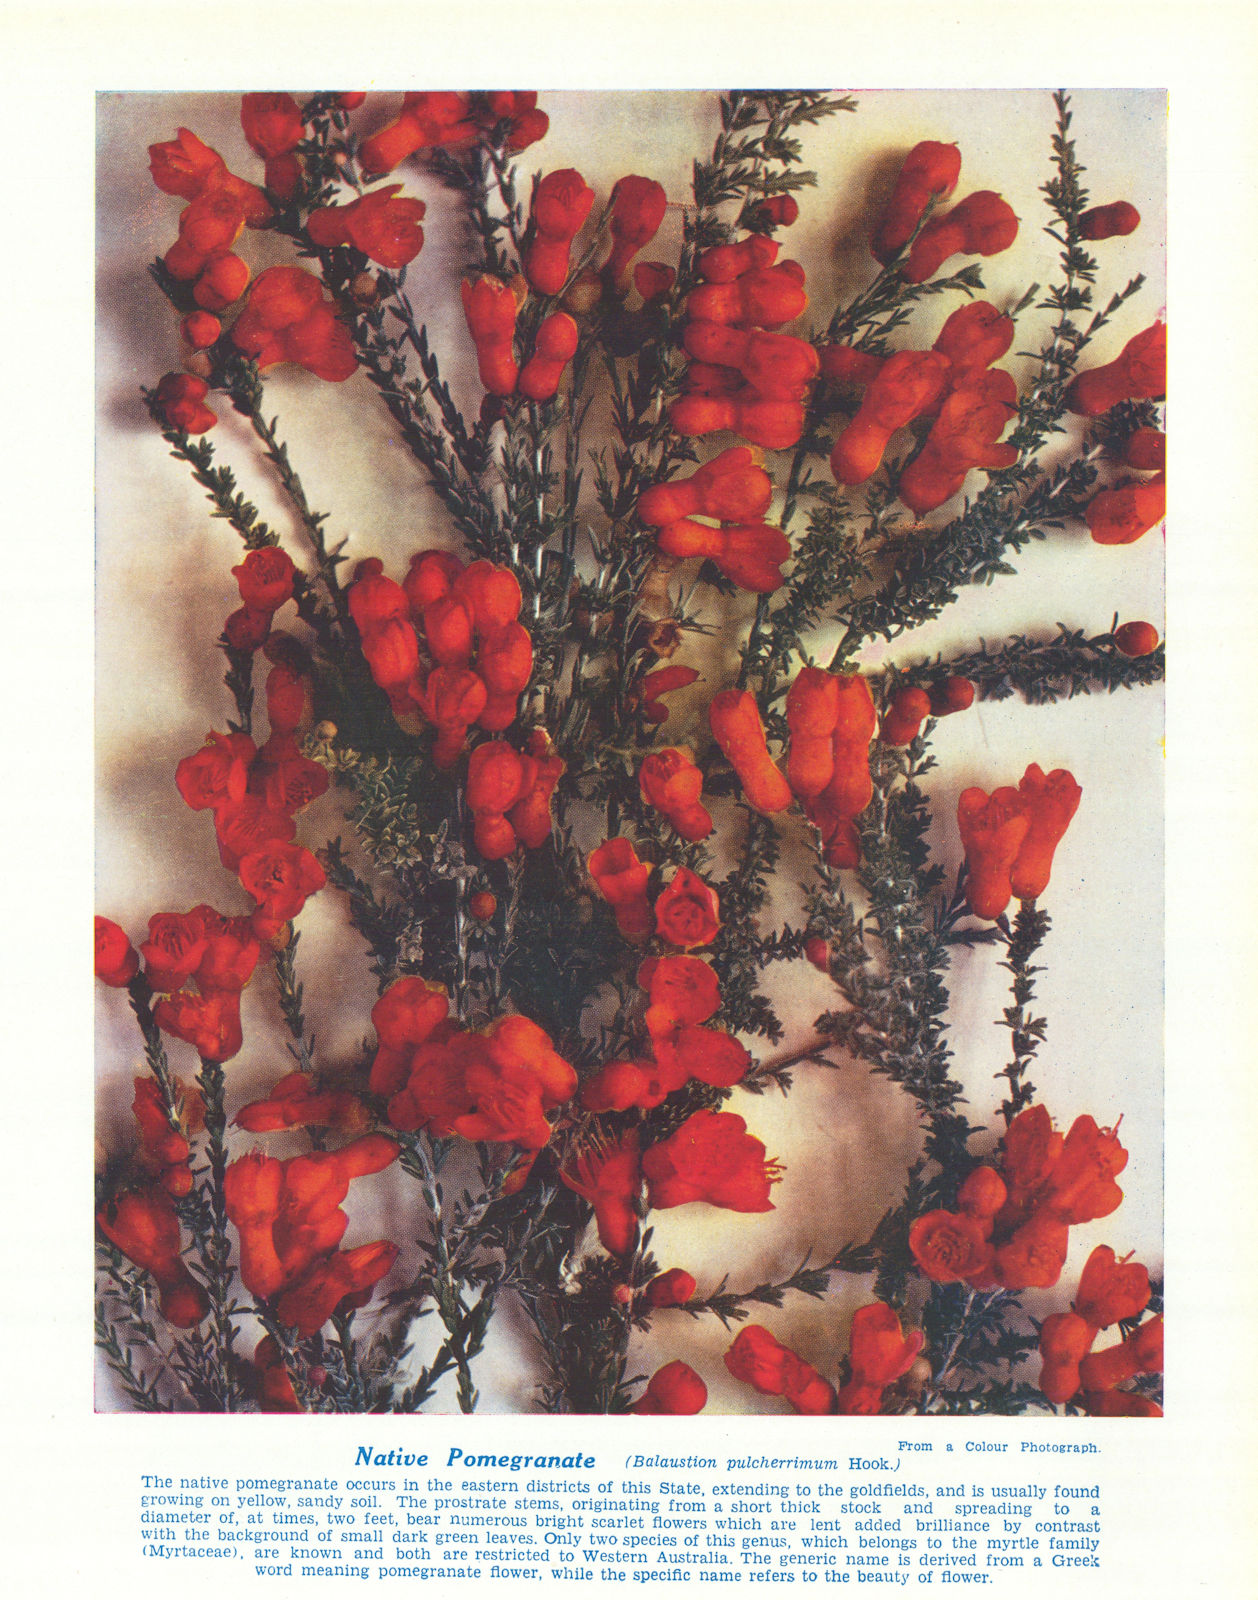 Native Pomegranate (Balaustion pulcherrimum). West Australian Wild Flowers 1950